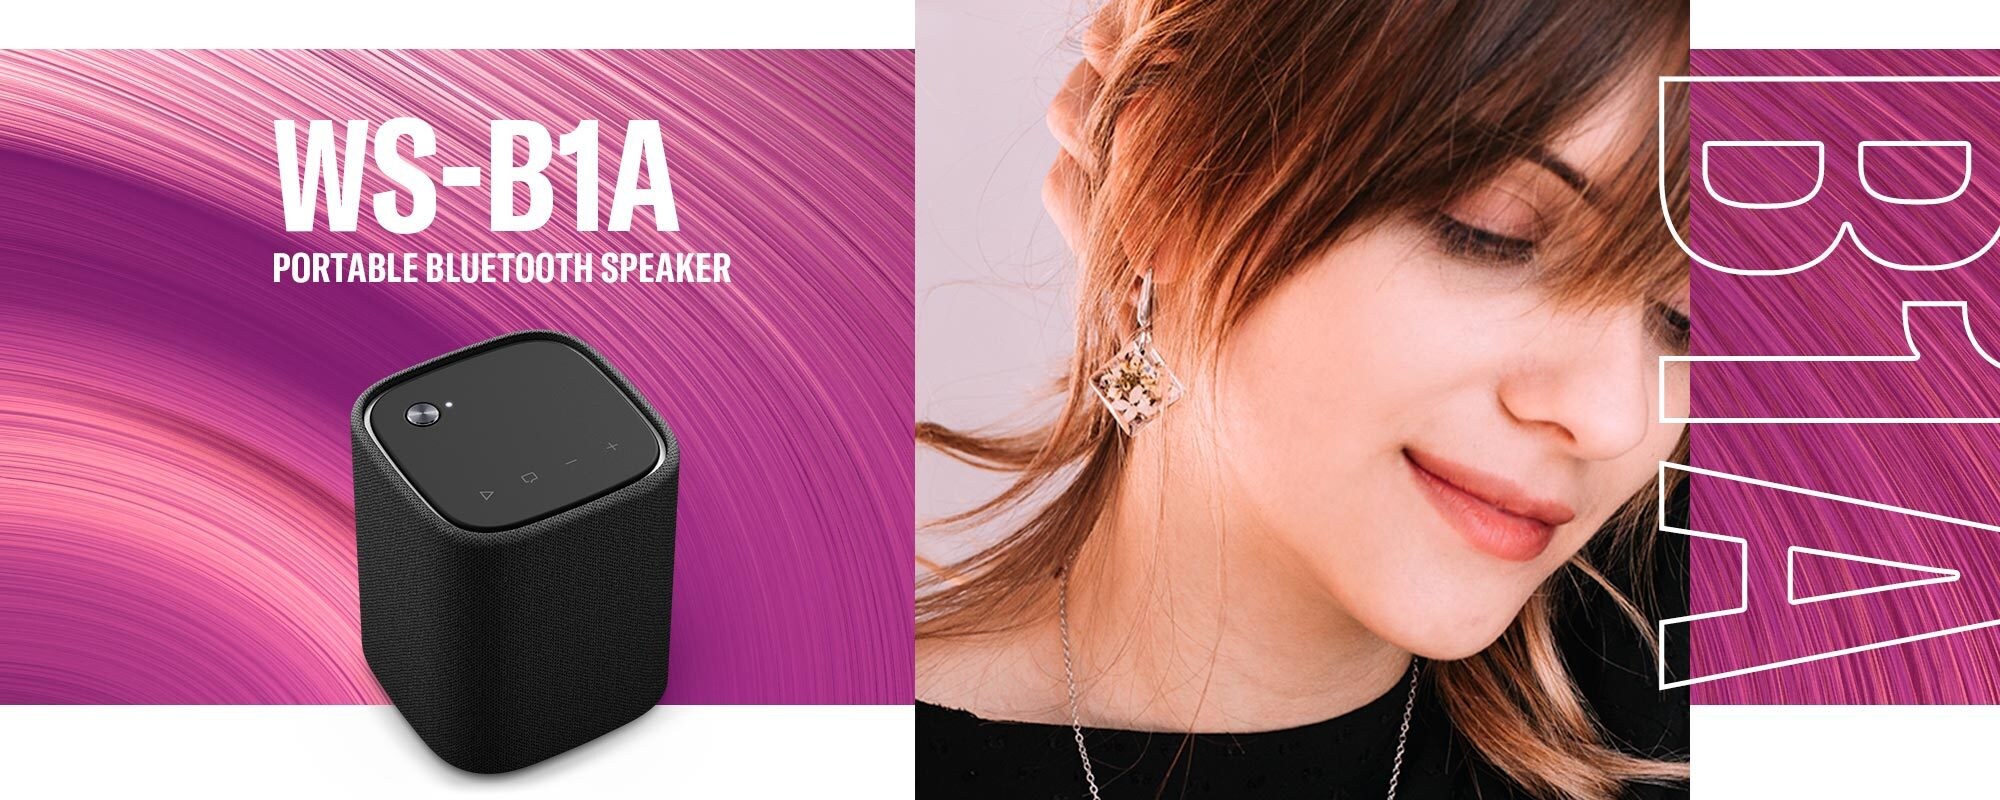 WS-B1A Portable Bluetooth Speaker Yamaha USA 